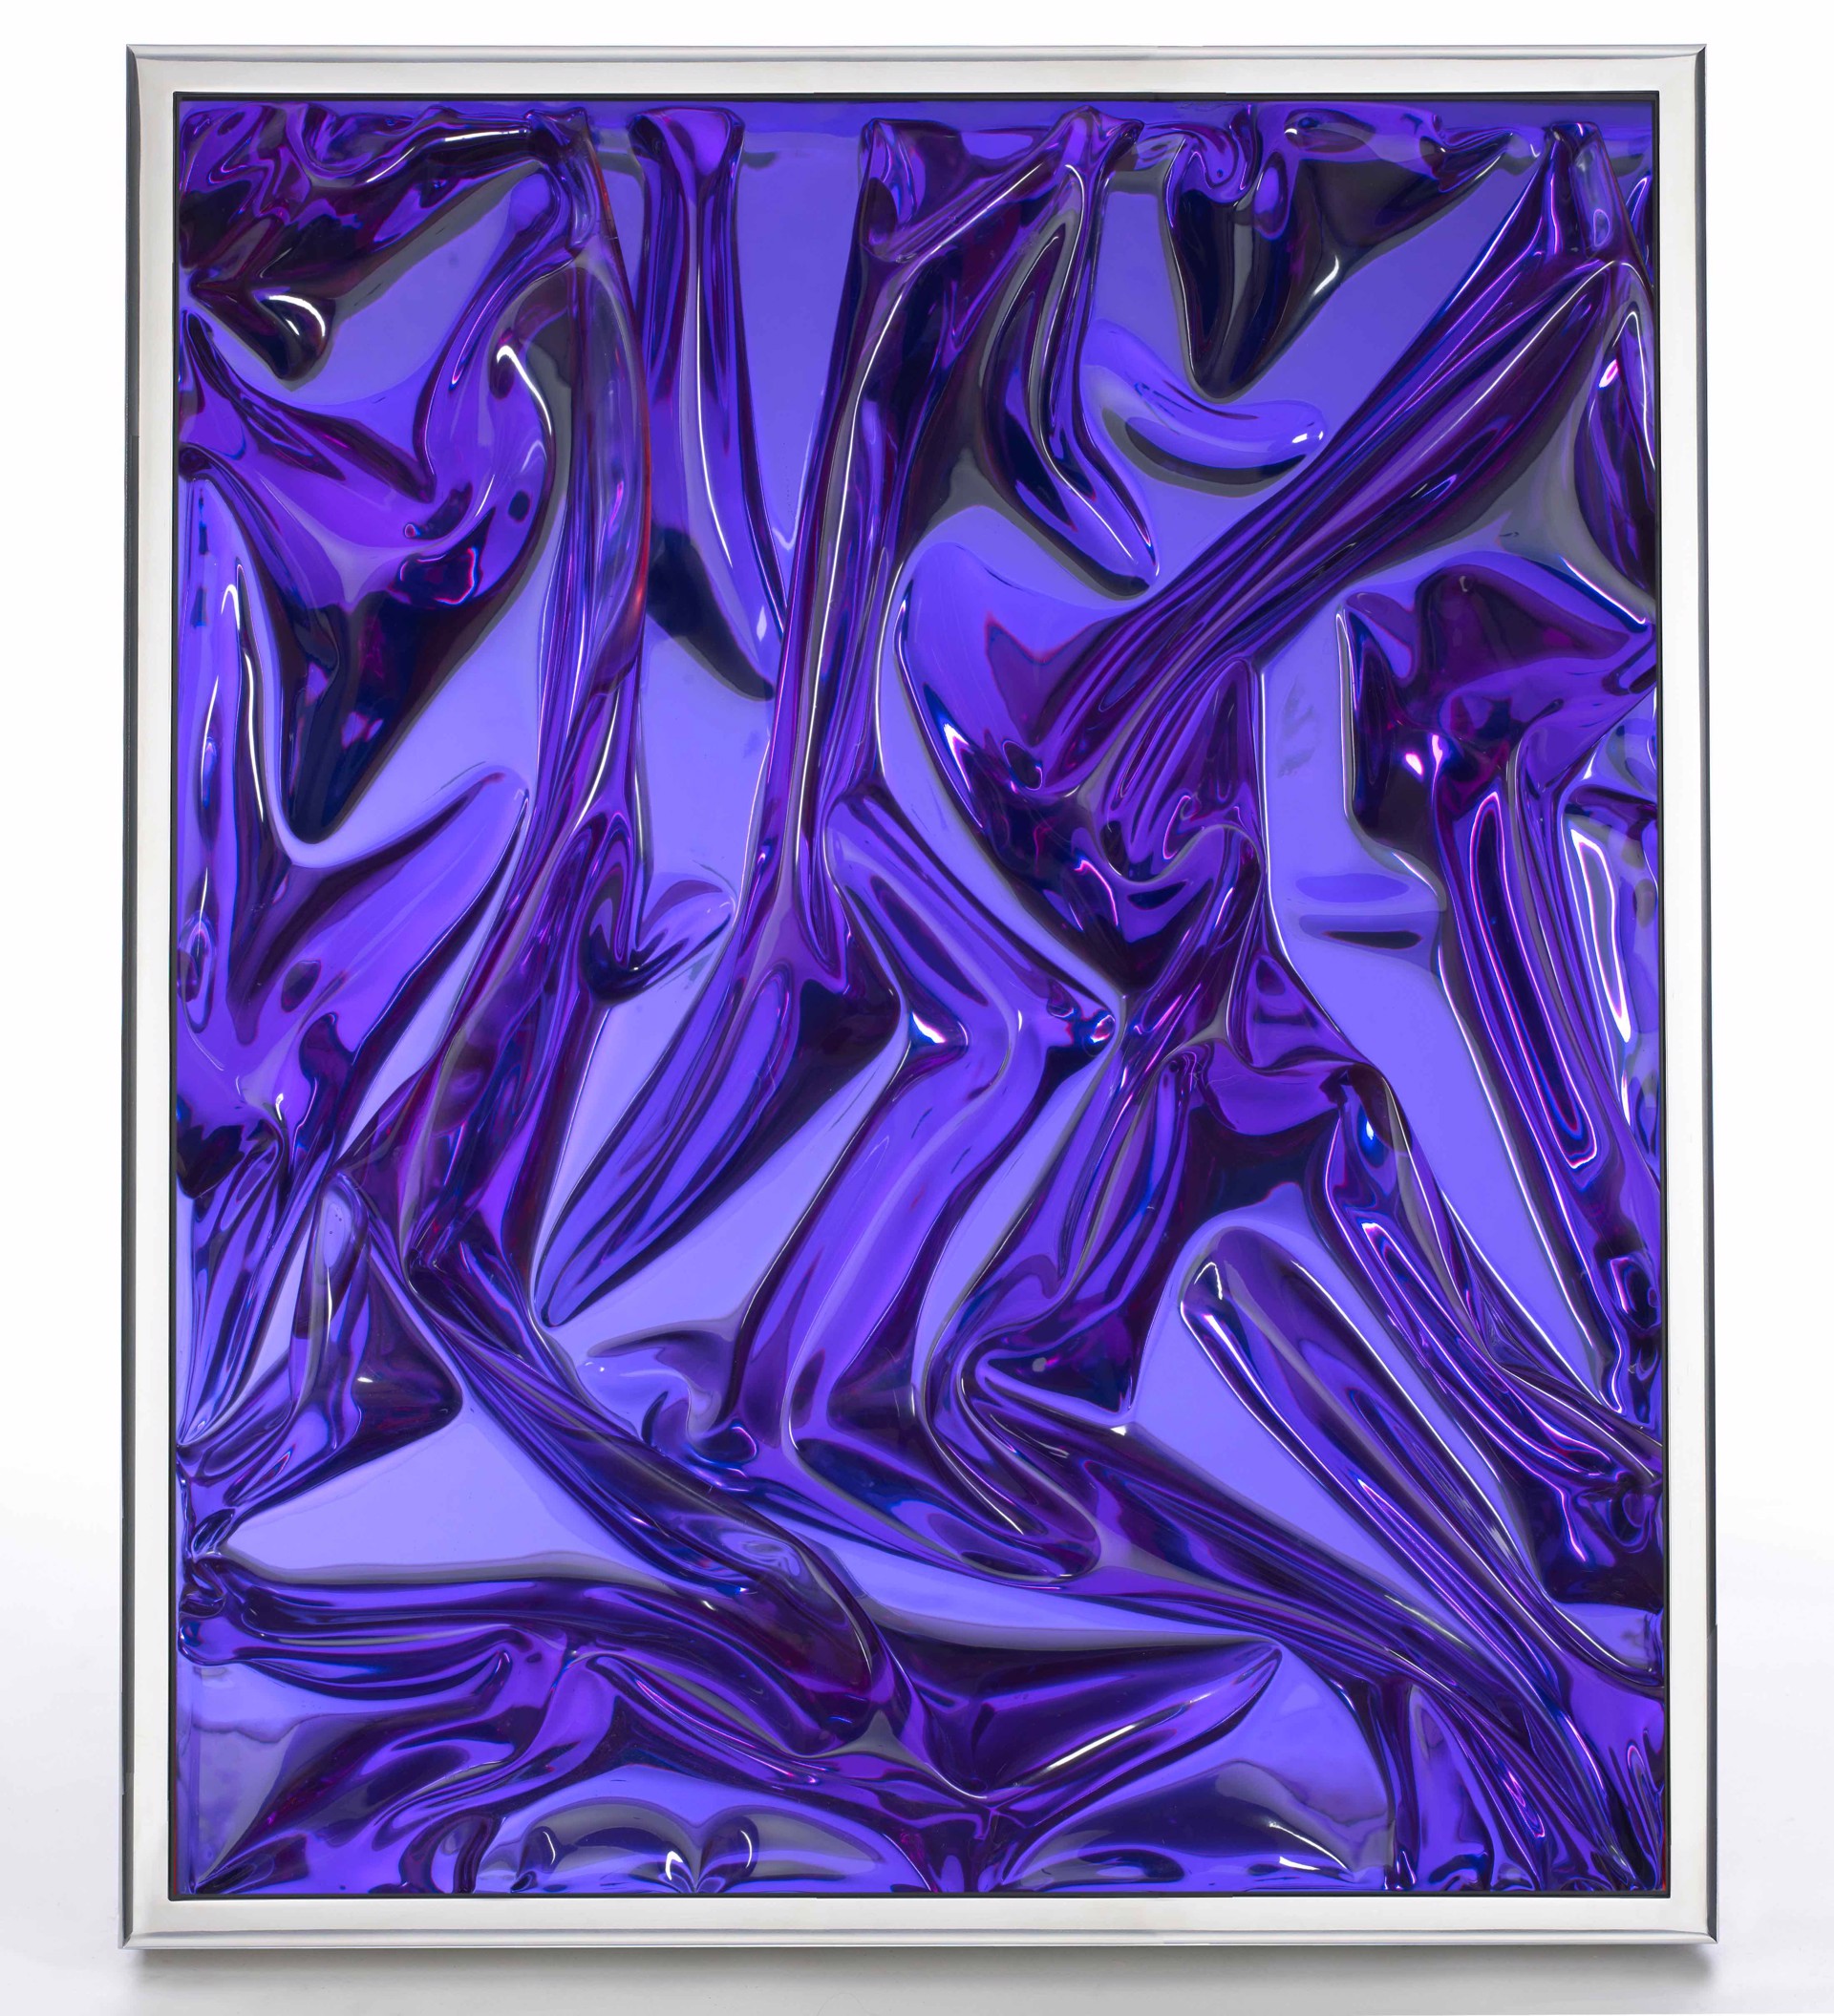 UNICUM (purple) by Mauro Perucchetti